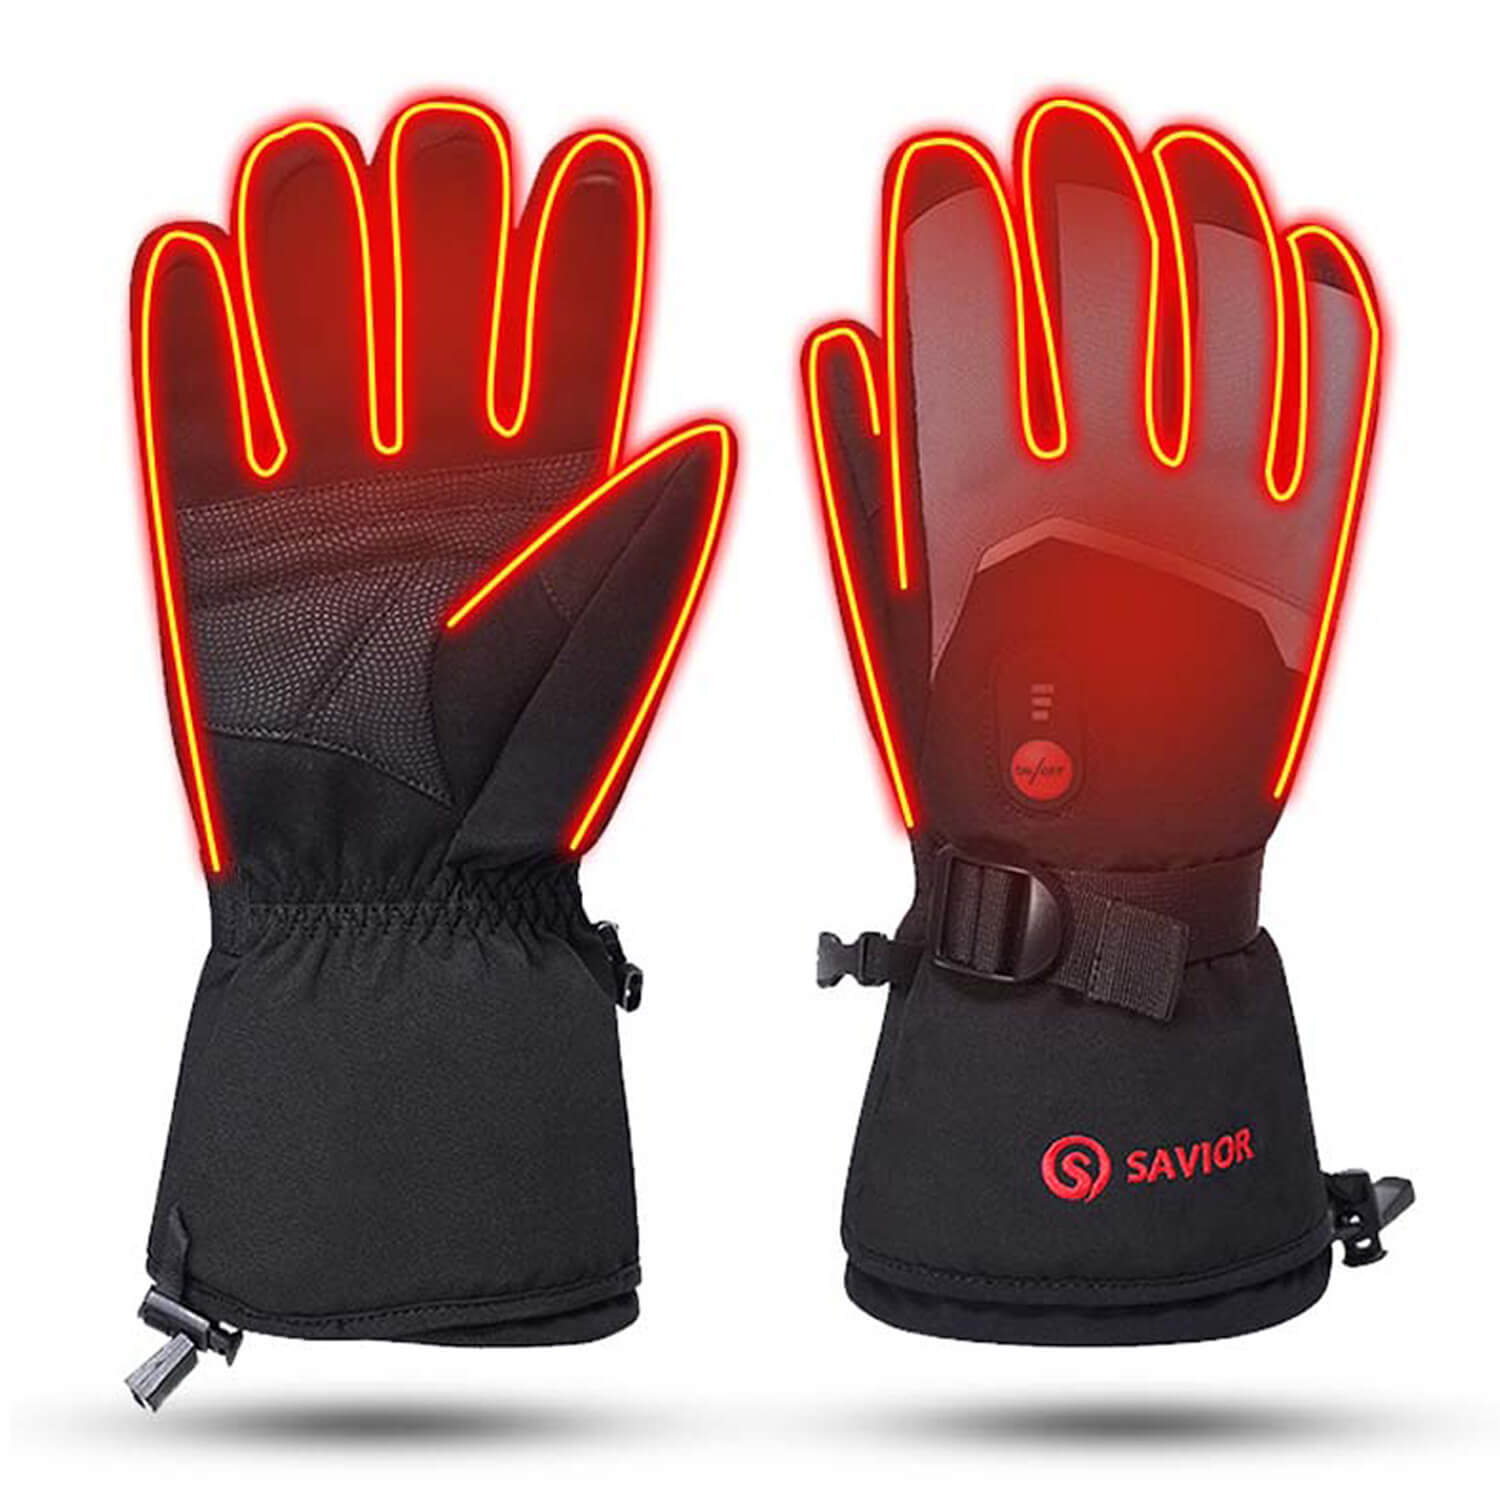 Savior Durable Heated Gloves